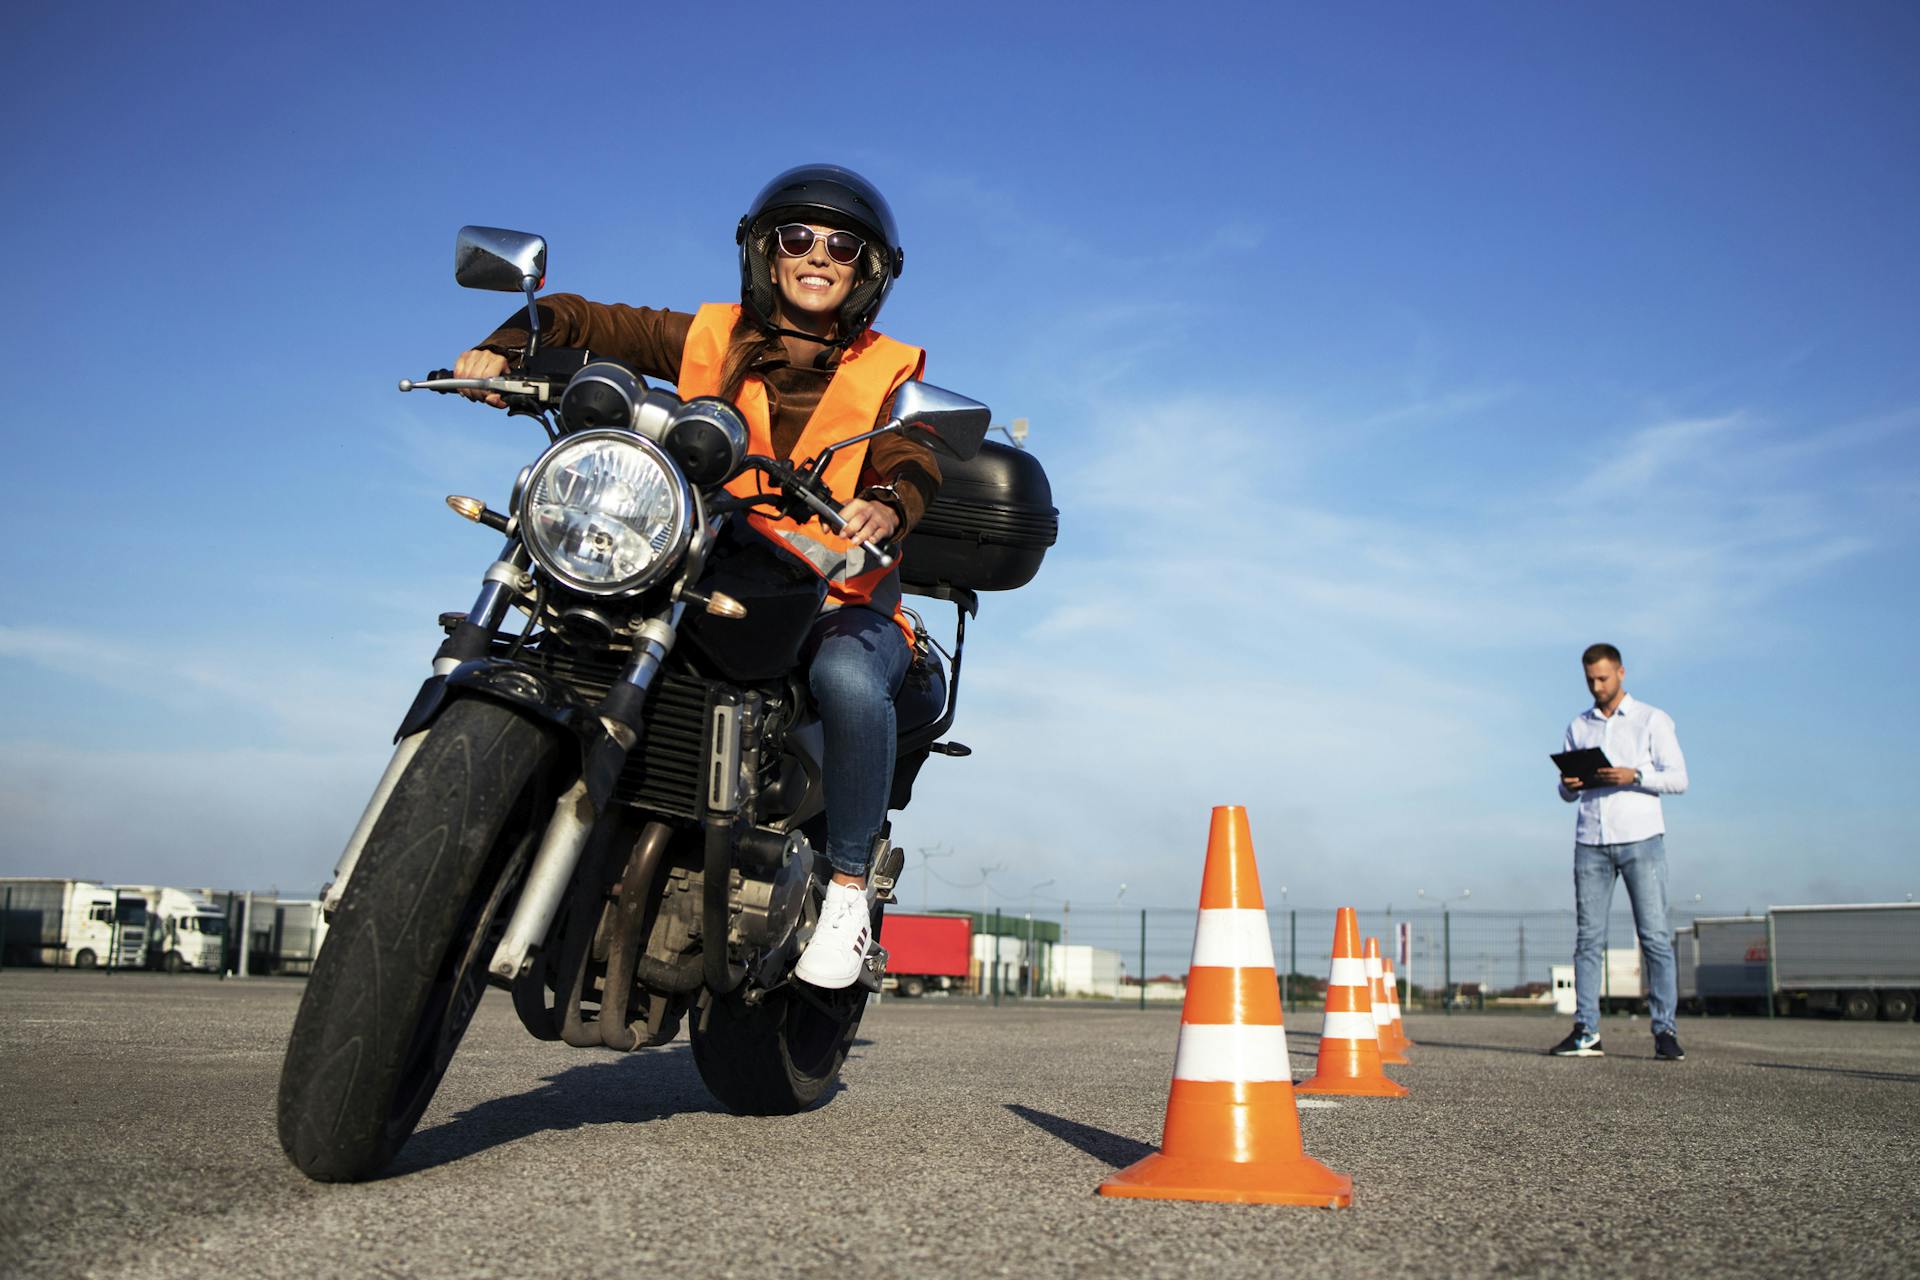 Persona con chaleco naranja y casco sobre motocicleta, persona al fondo.